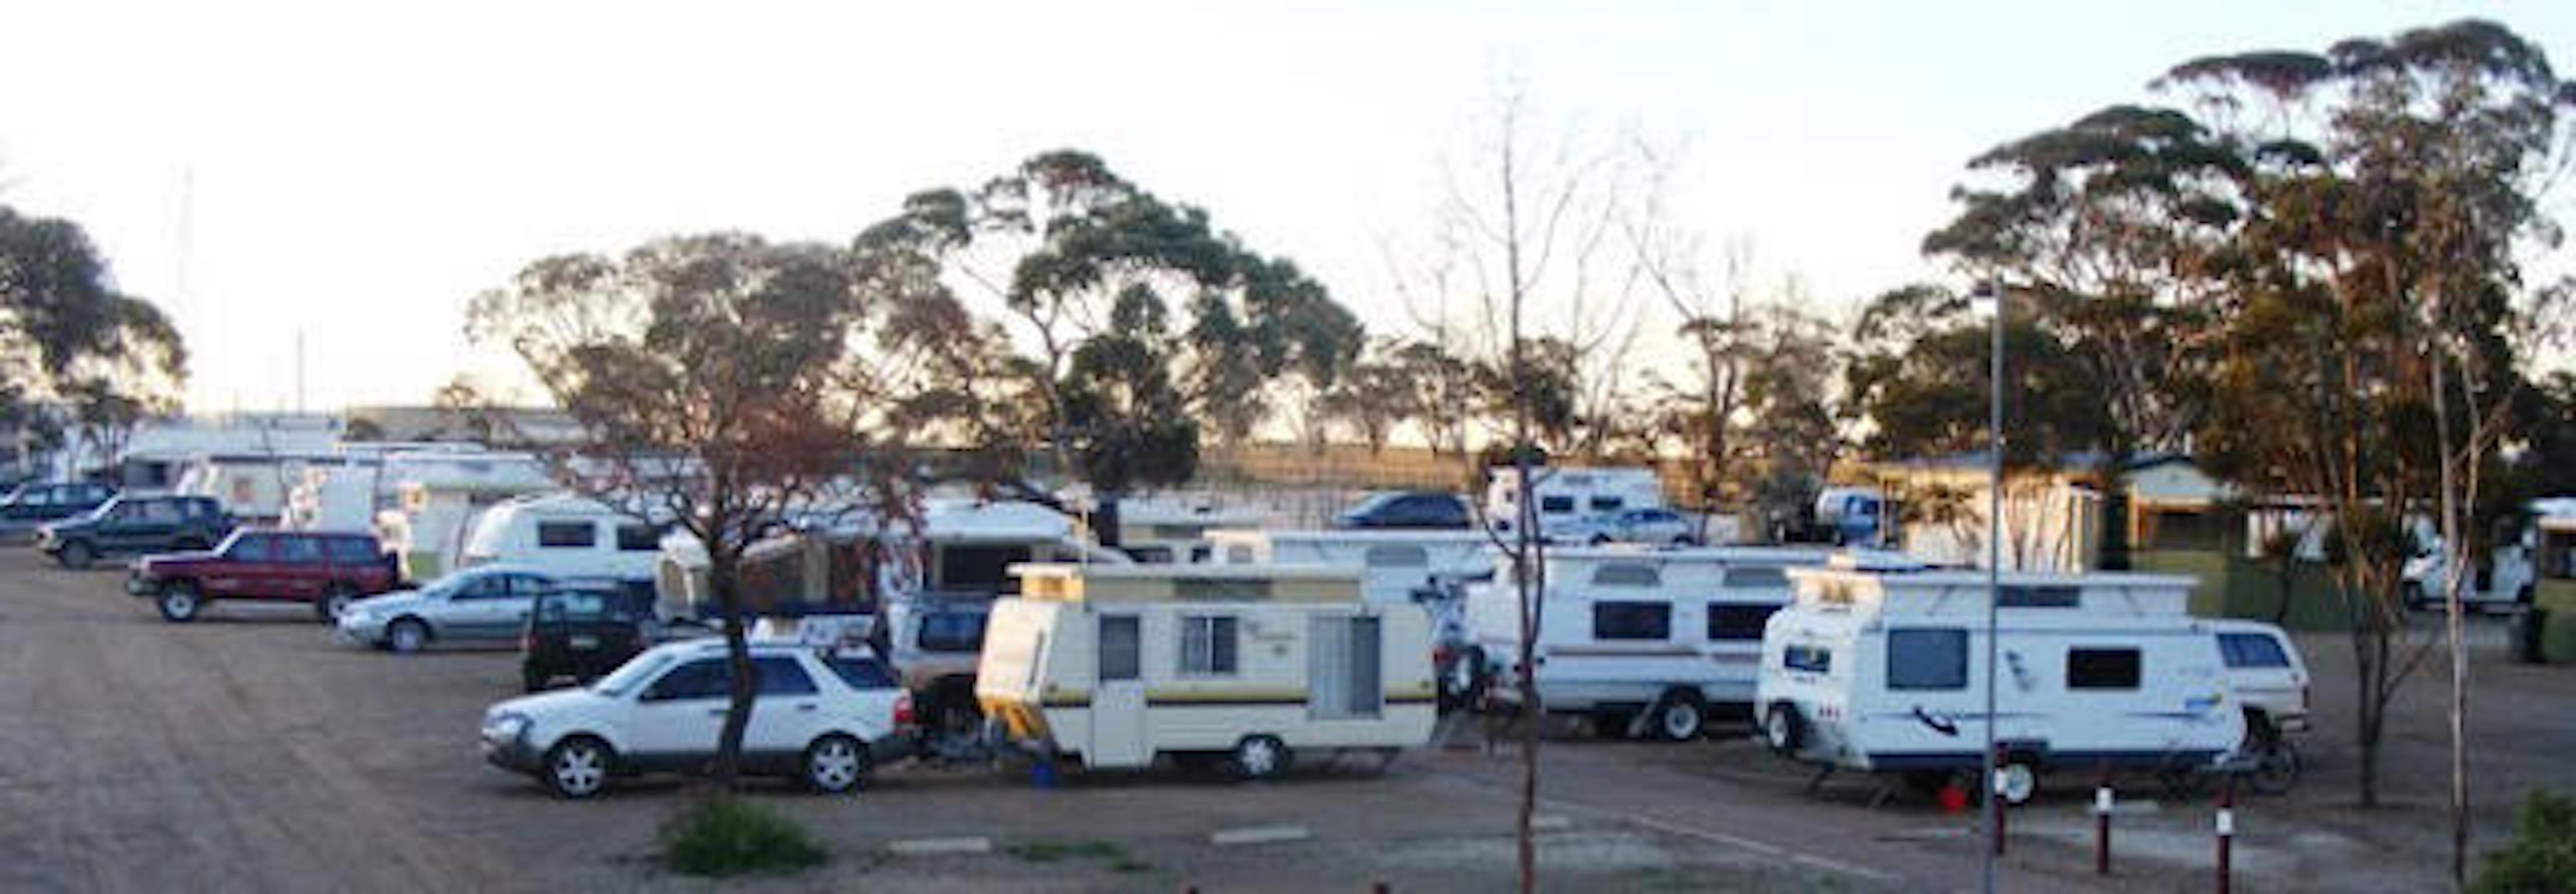 Woomera Traveller's Village and Caravan Park - Accommodation Rockhampton